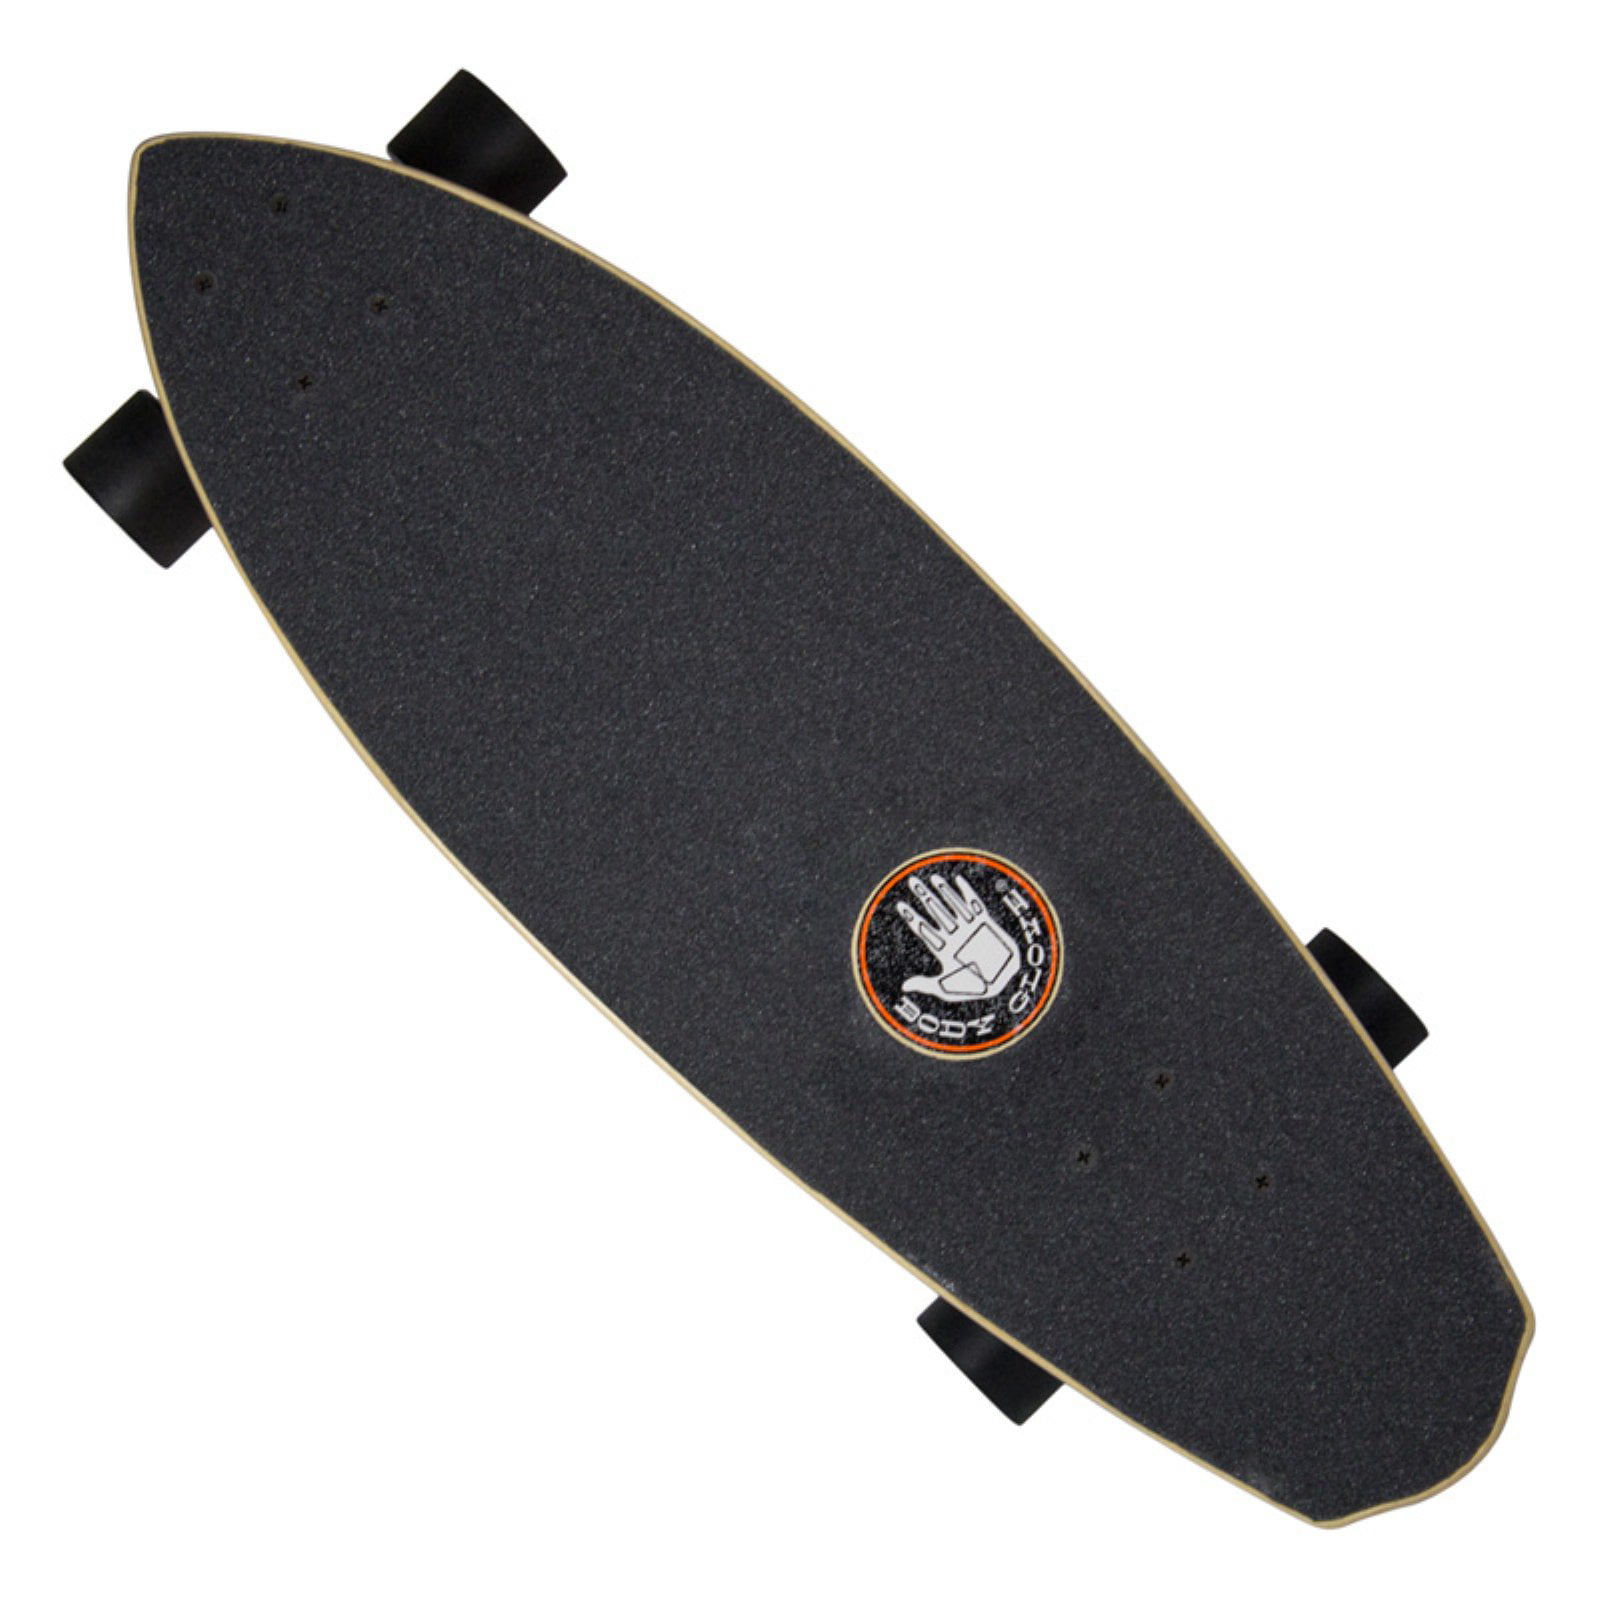 Body Glove Surfskate Skateboard International